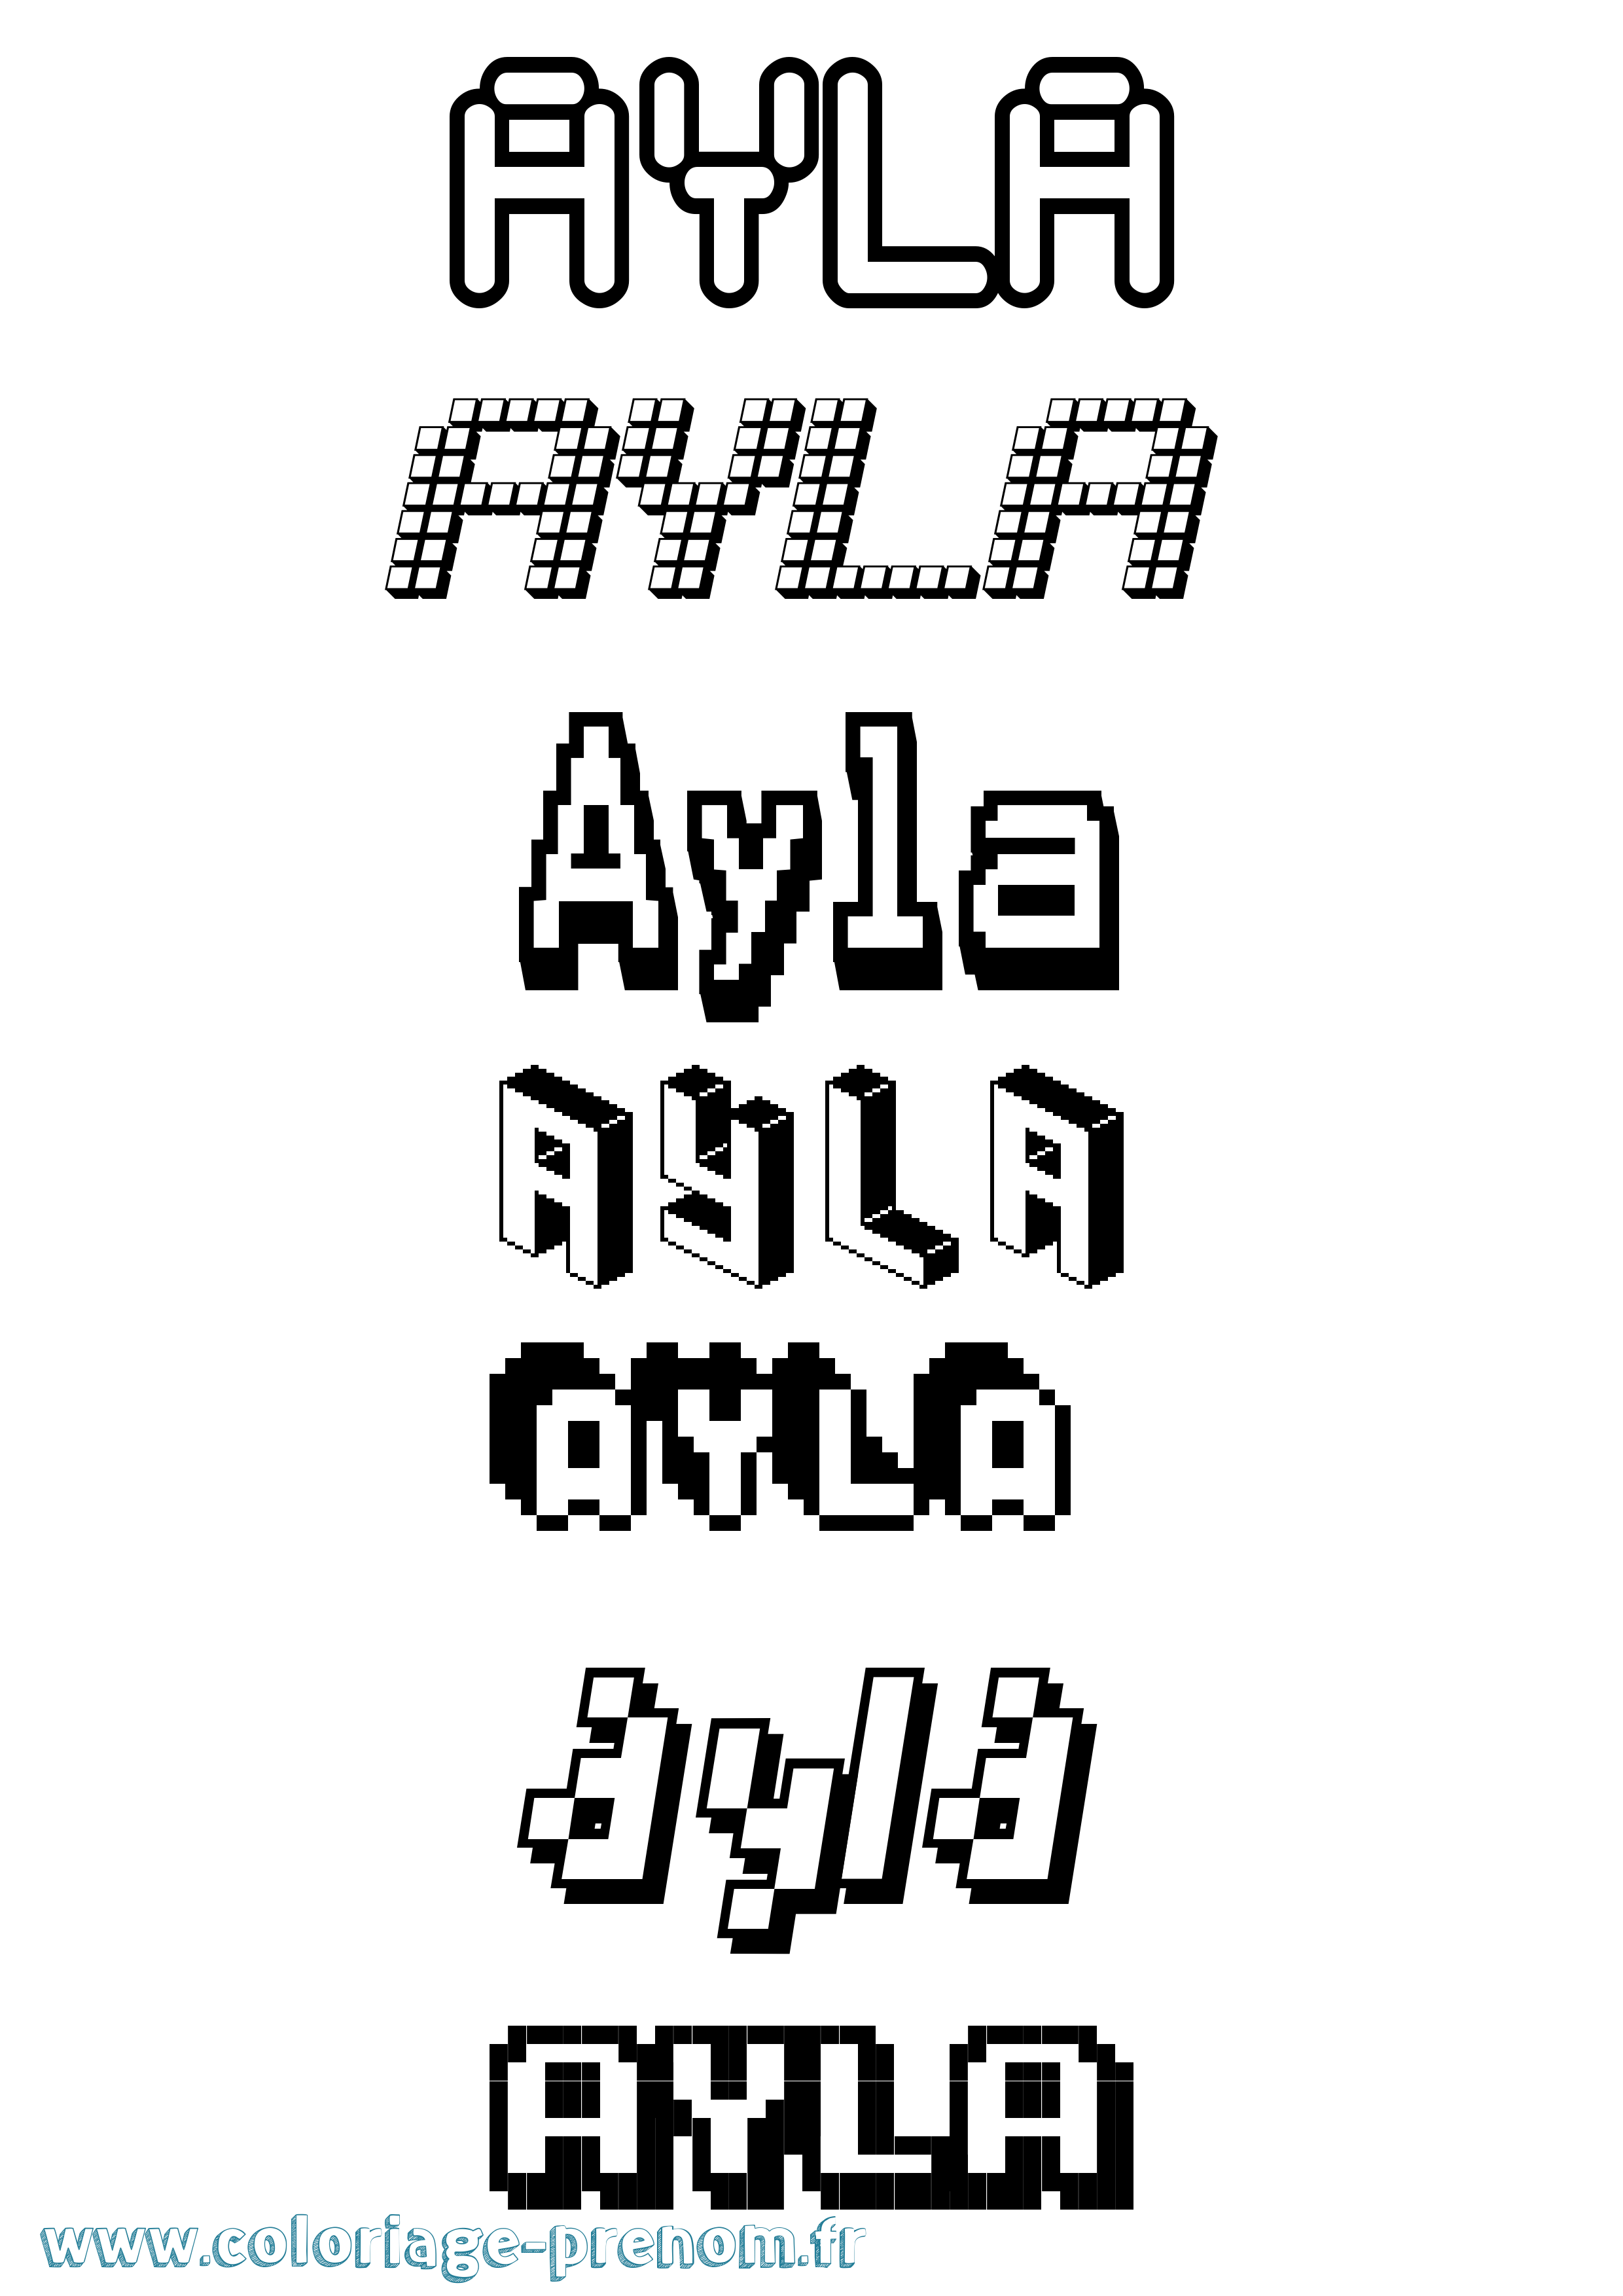 Coloriage prénom Ayla Pixel